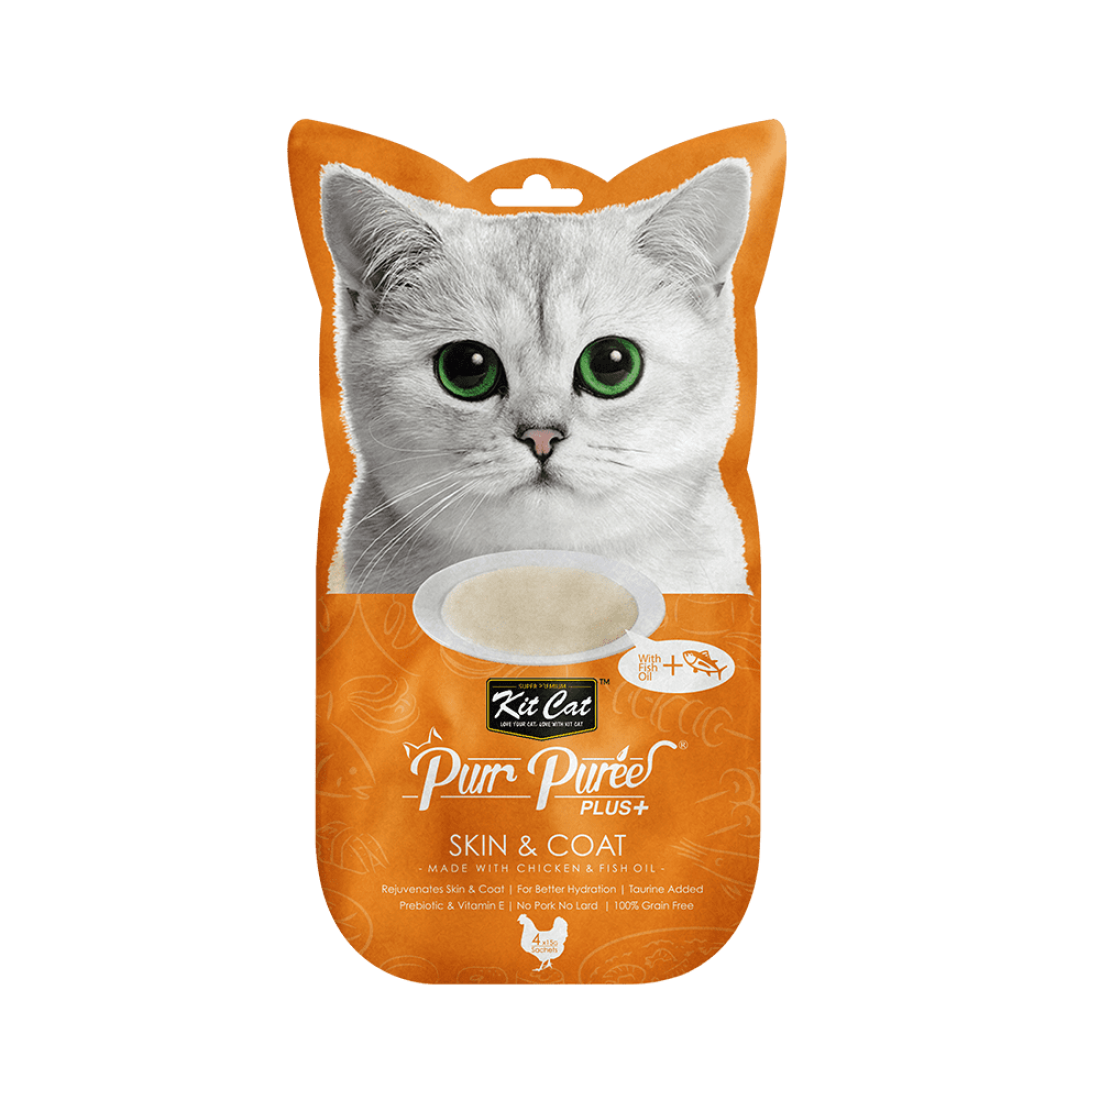 Recompense lichde pentru pisici Kit Cat Purr Puree Plus+ Skin & Coat , pui si ulei de peste, 4x15g